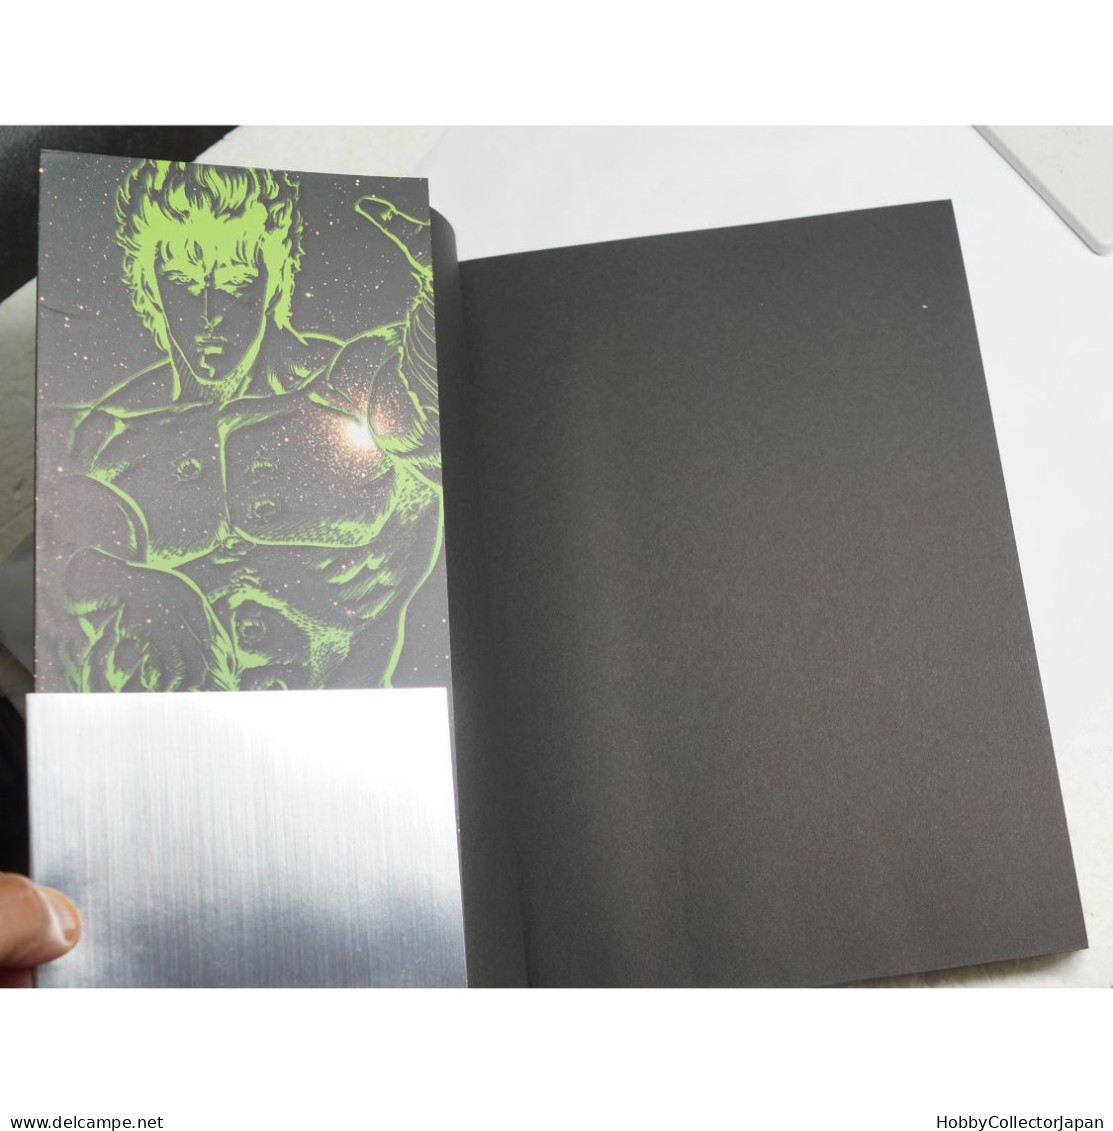 Fist Of The North Star 2 Raijin Comics Master Edition Full Color ( Original Version ) - Comics & Manga (andere Sprachen)